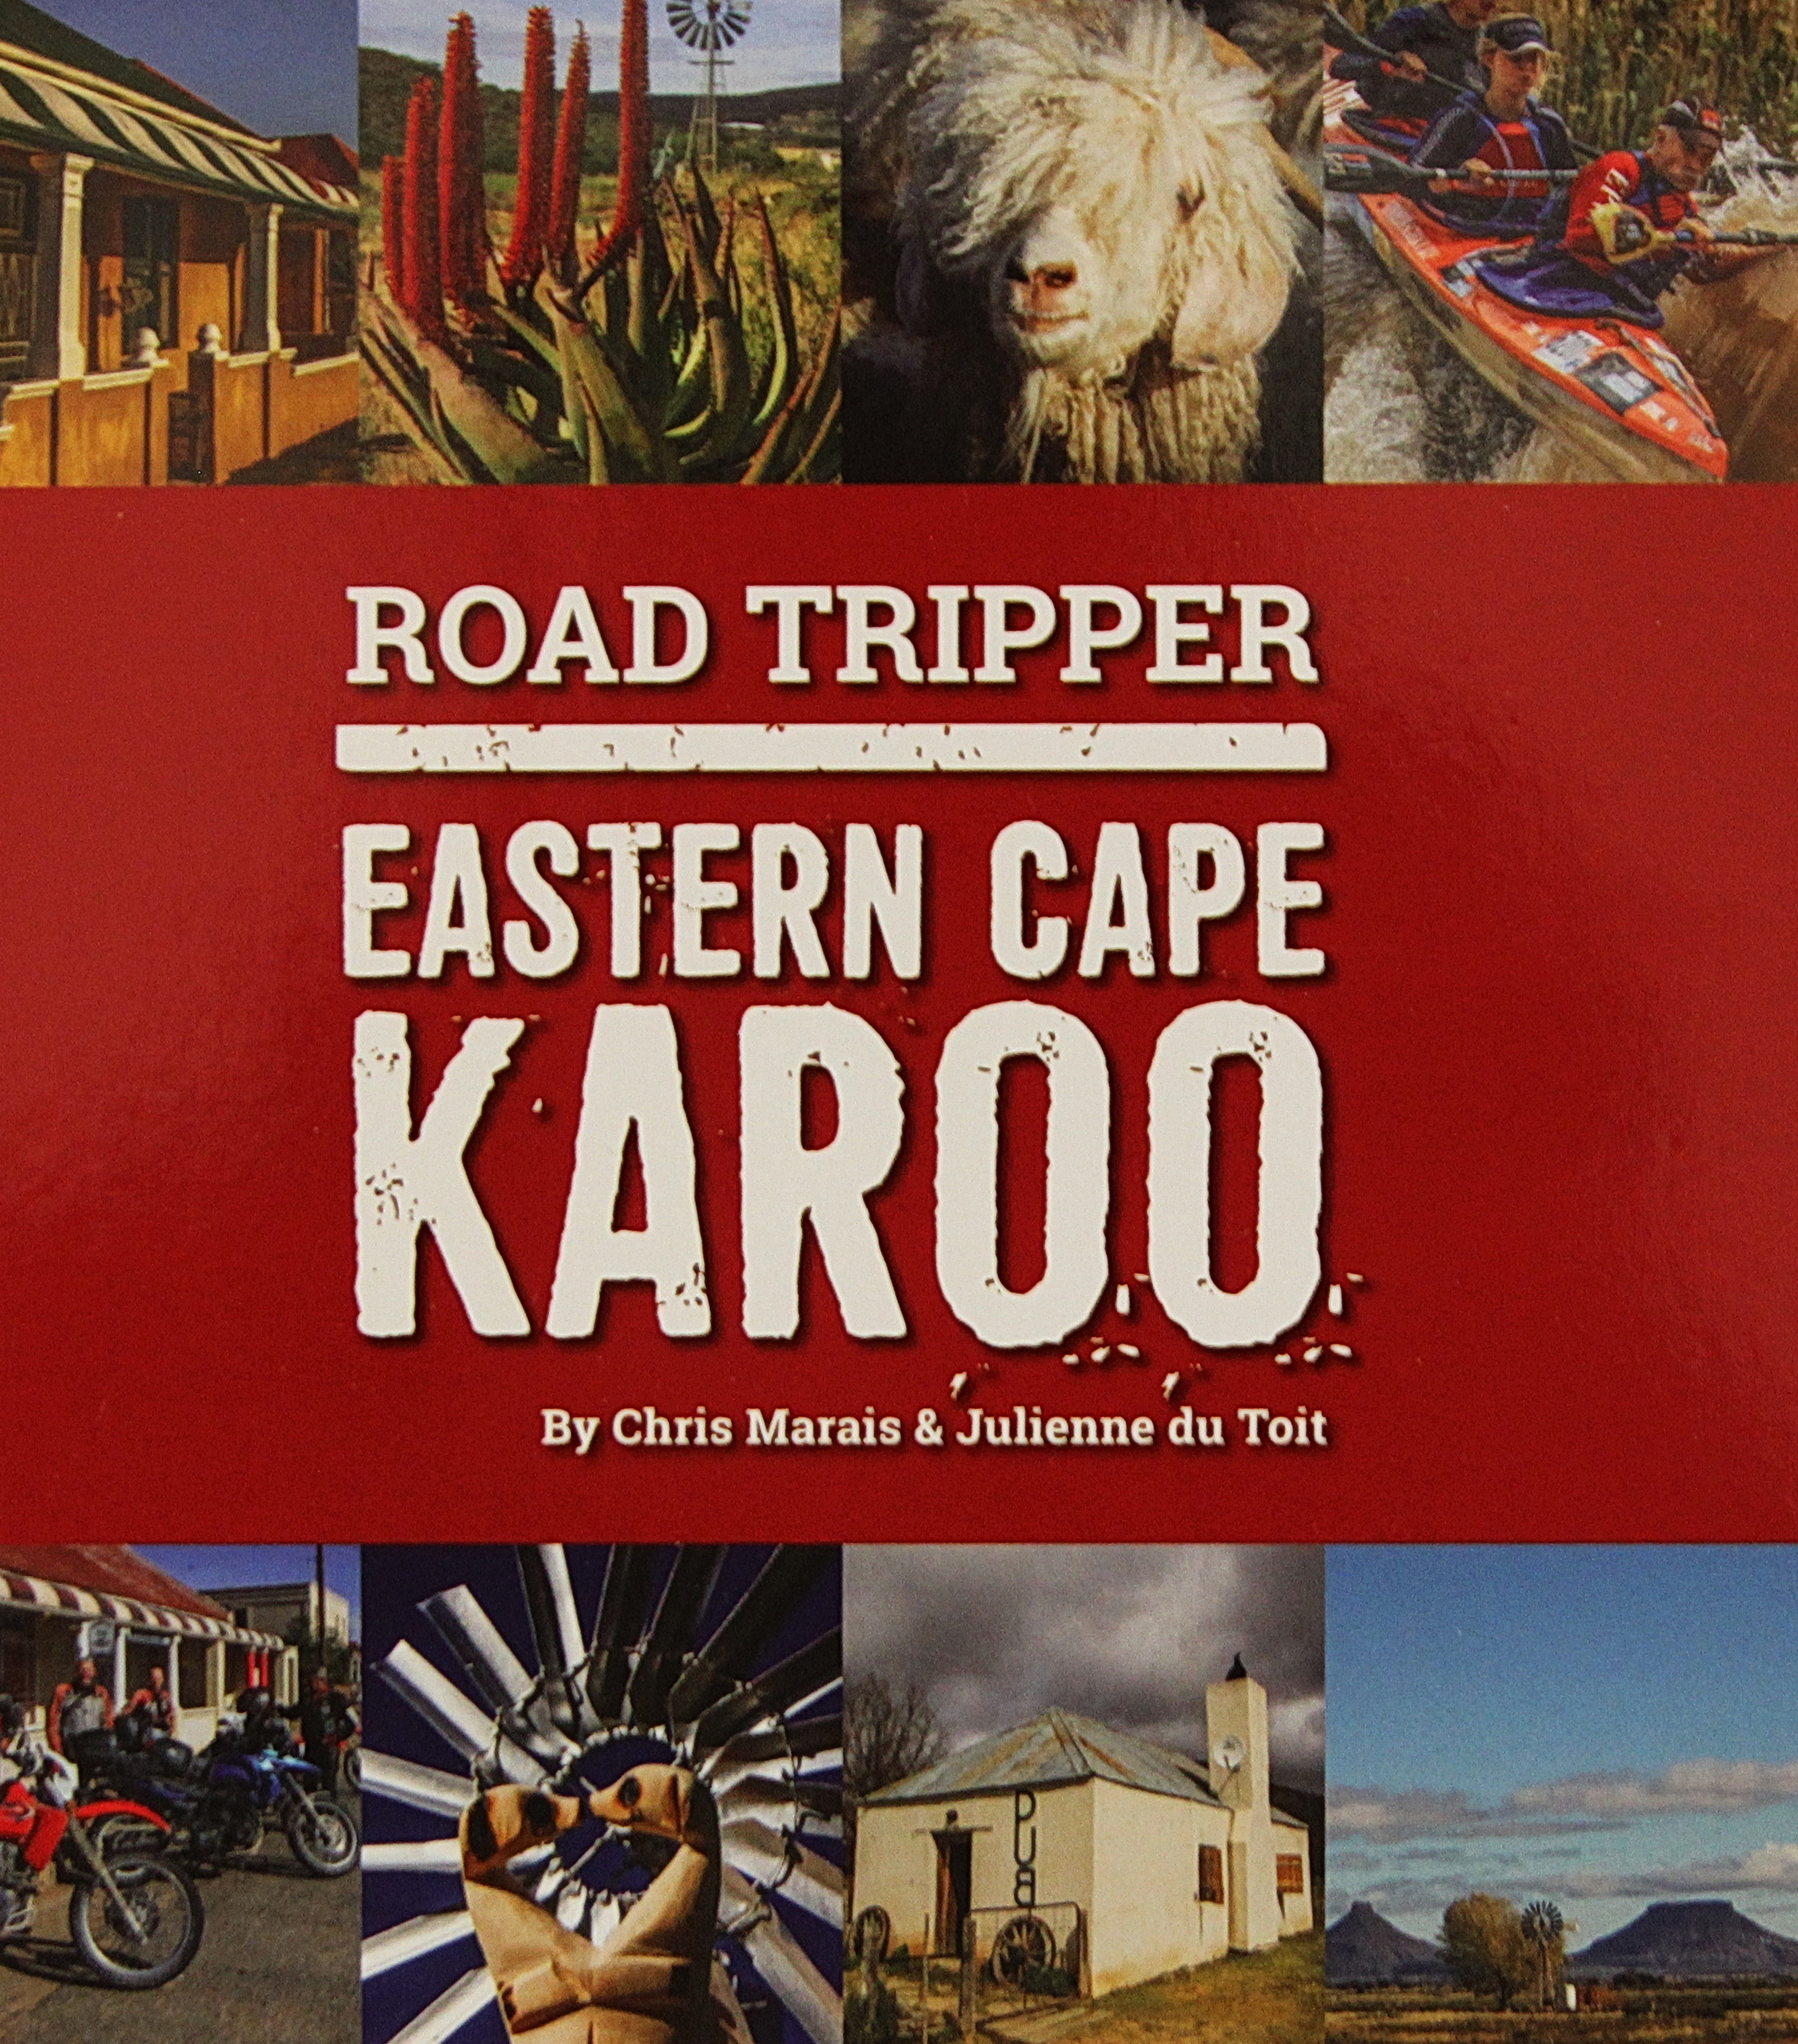 'Road Tripper: Eastern Cape Karoo' by Chris Marais and Julienne du Toit.